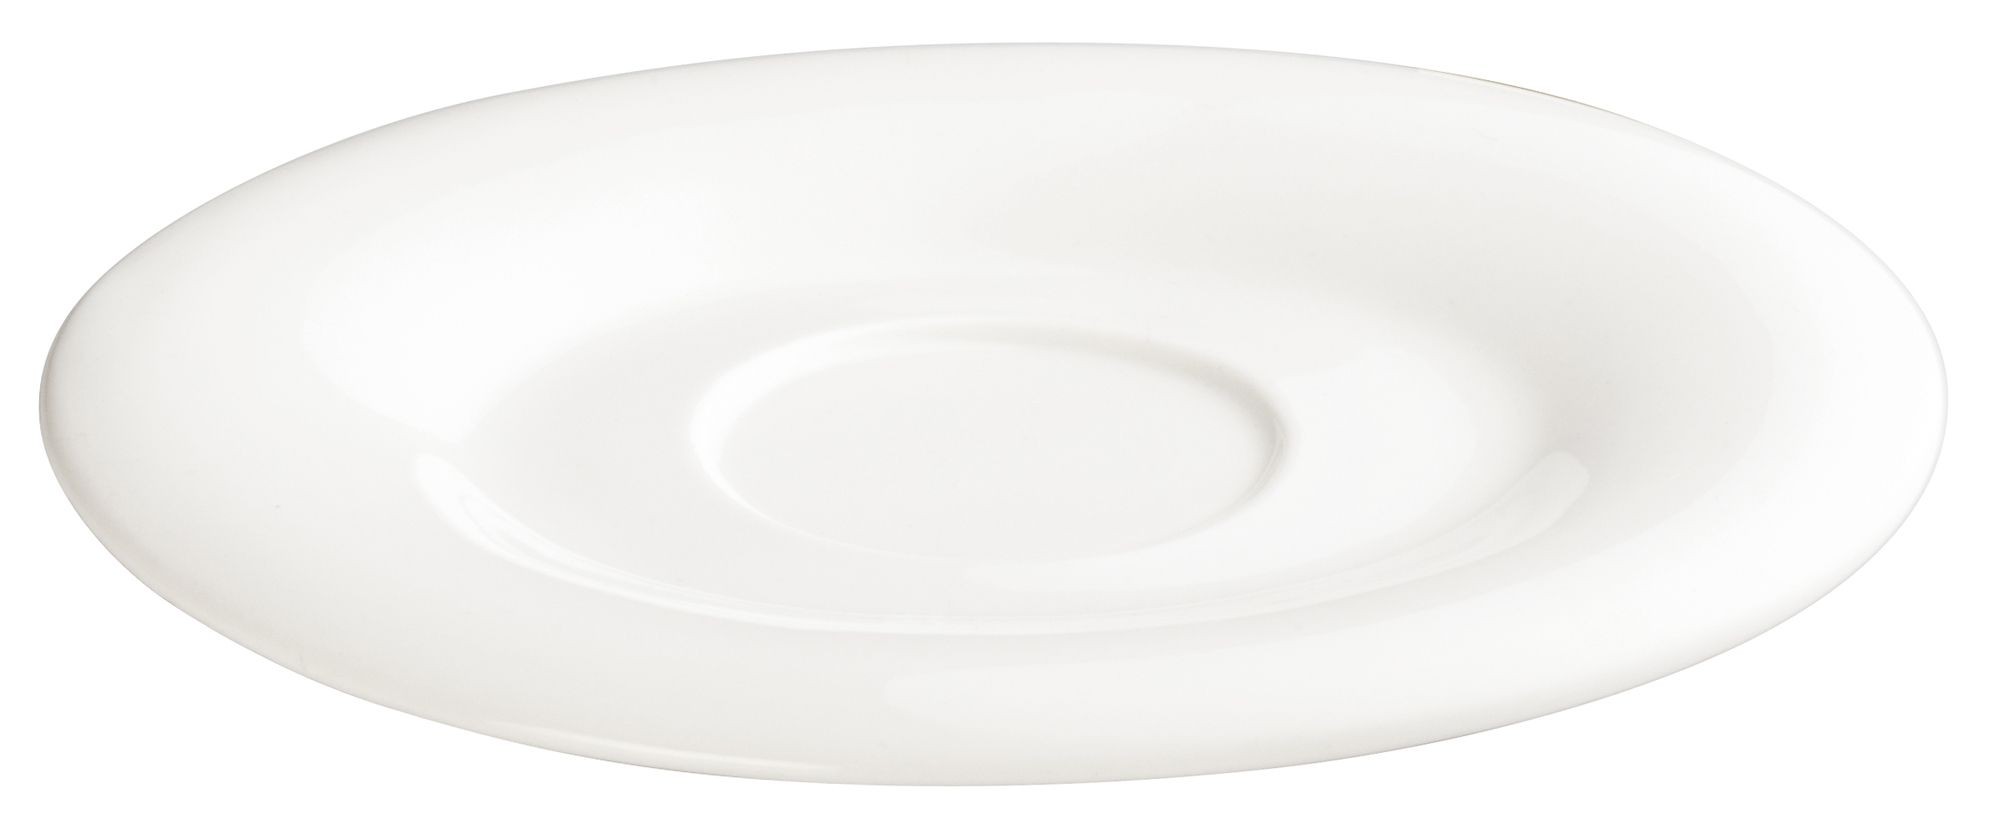 Winco WDP004-215 Ocea Creamy White Porcelain Oval Saucer 6-1/4" x 5-1/2"